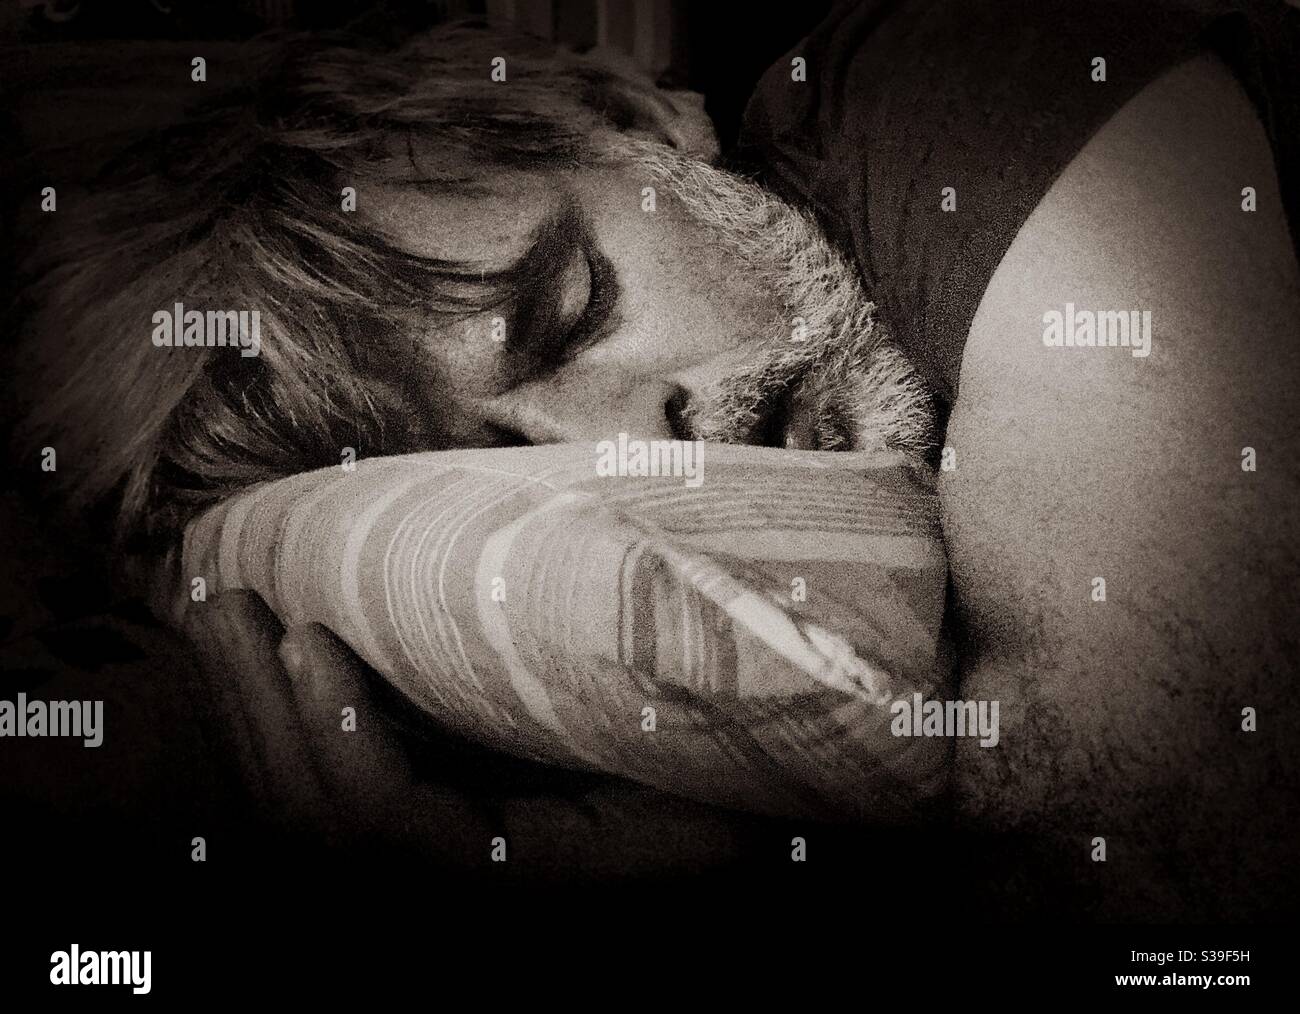 Sleeping Man Stock Photo